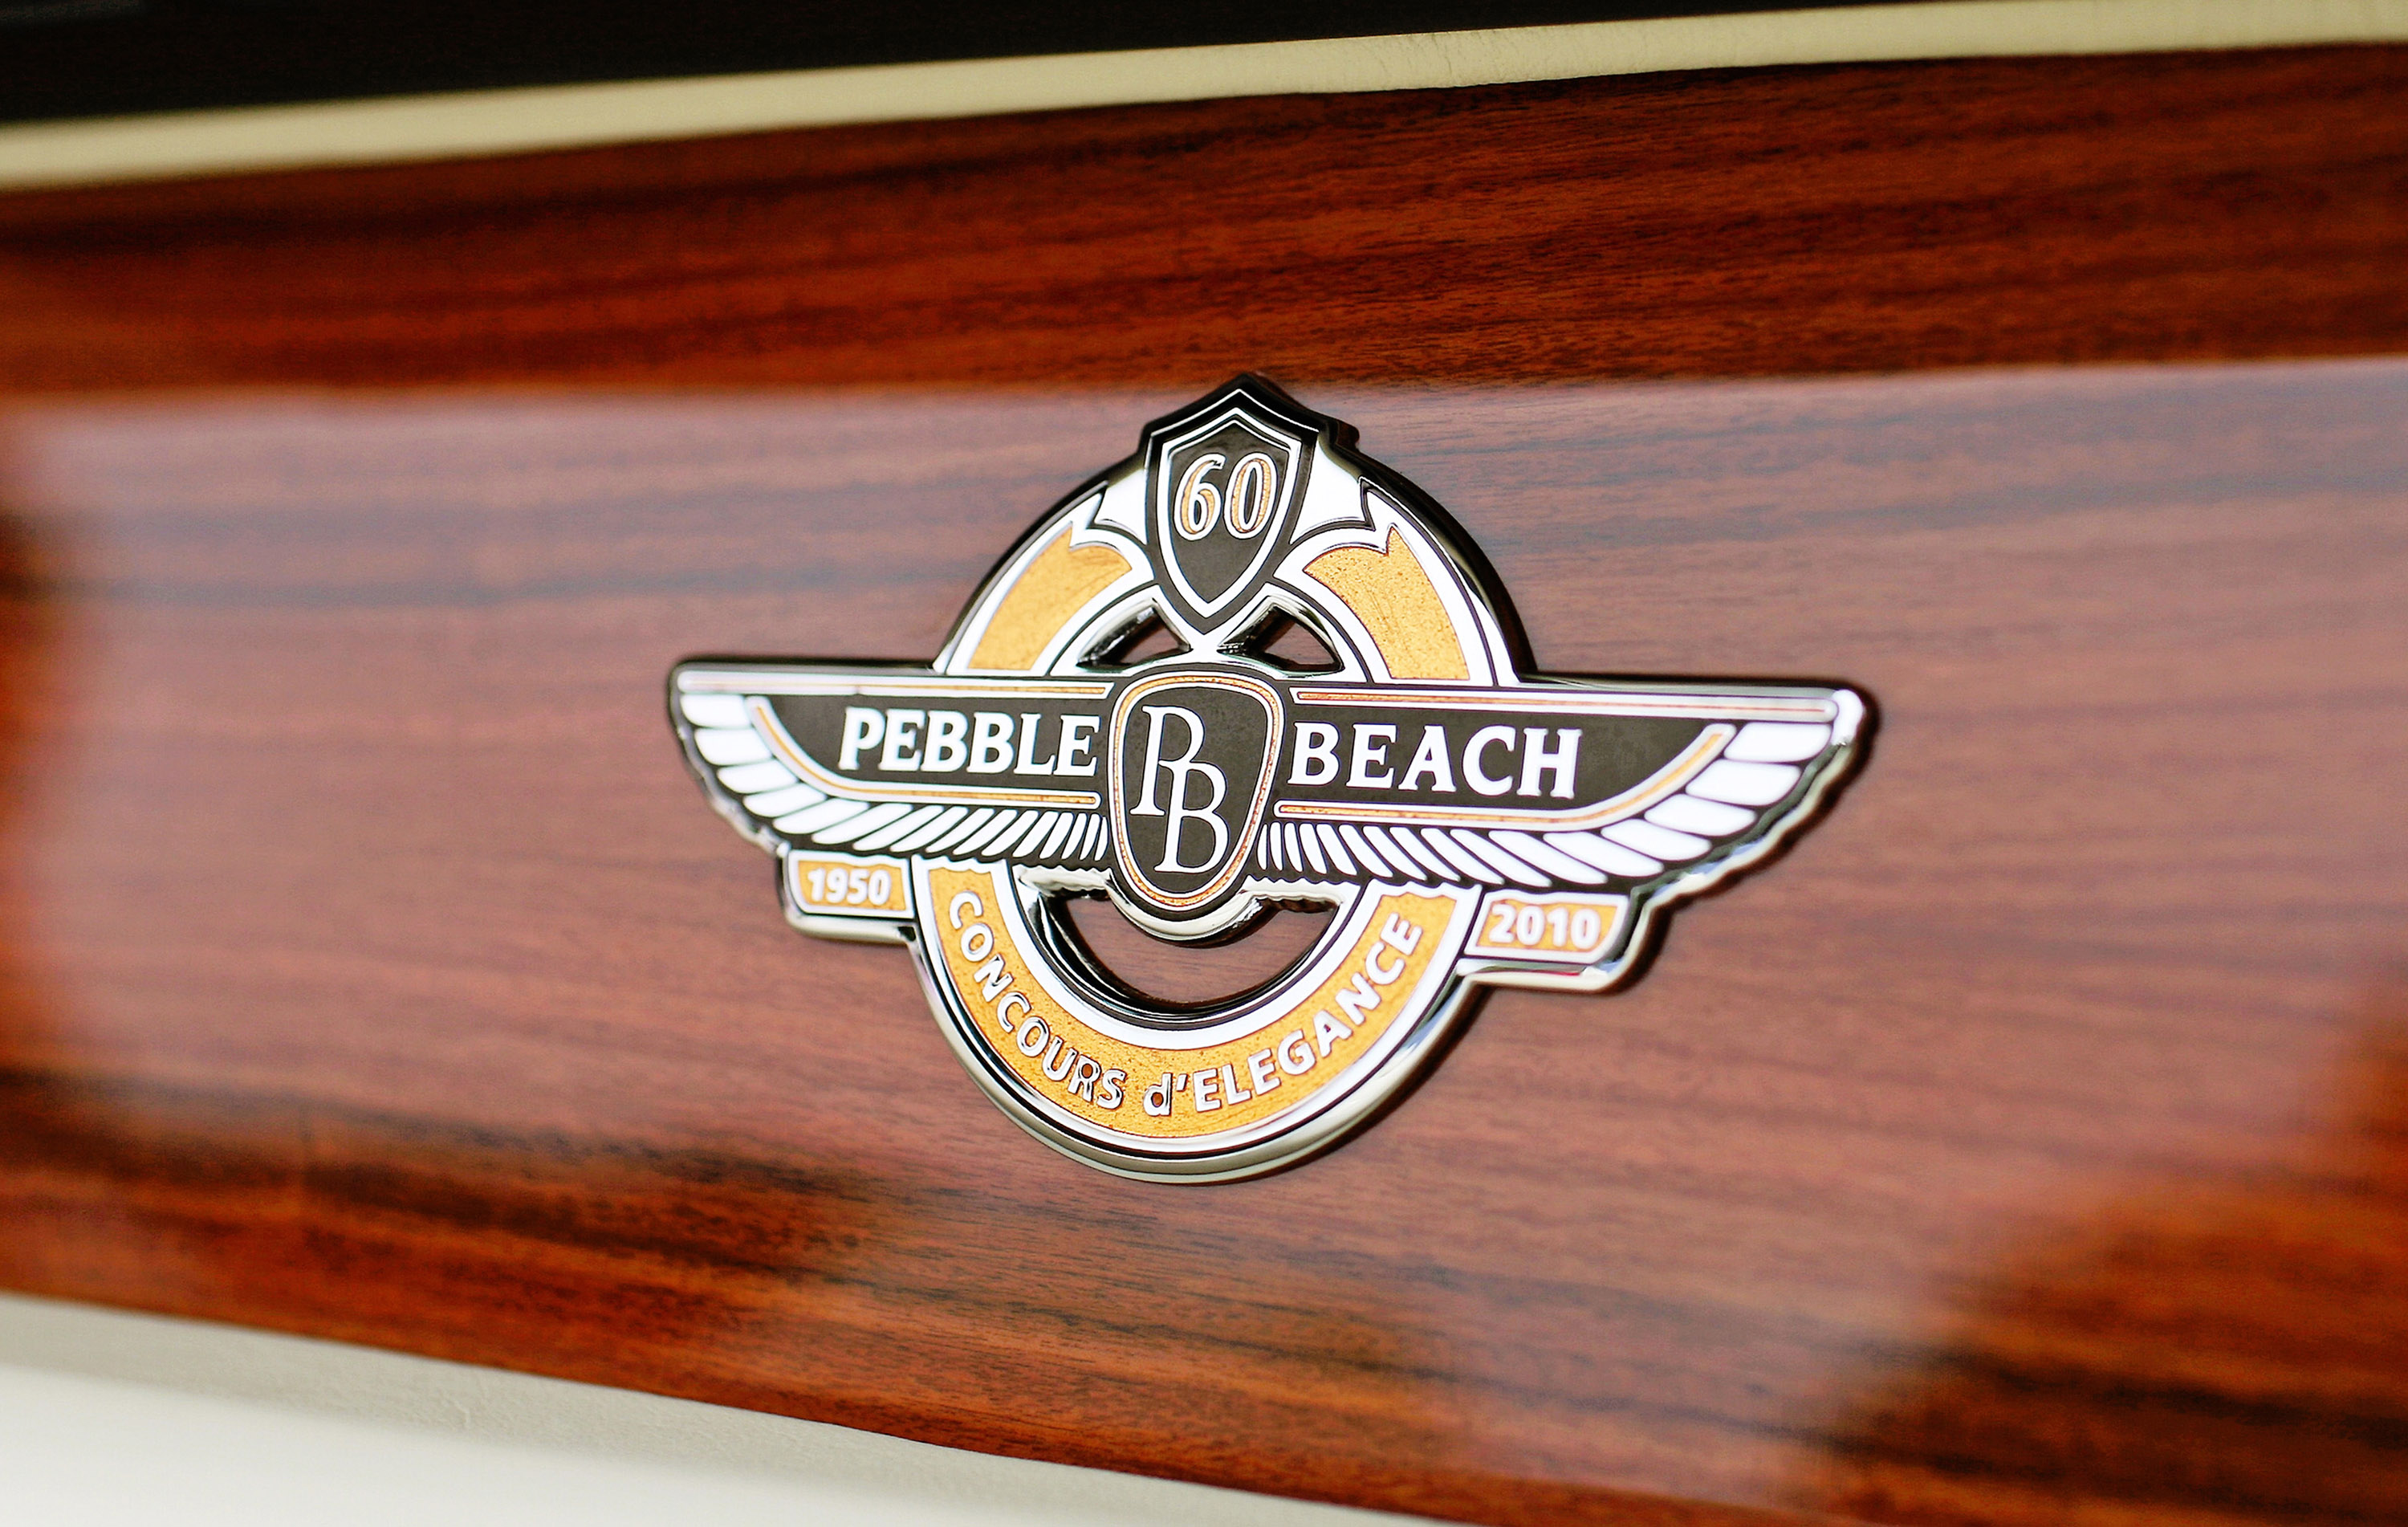 Rolls-Royce Phantom Pebble Beach 60th Anniversary